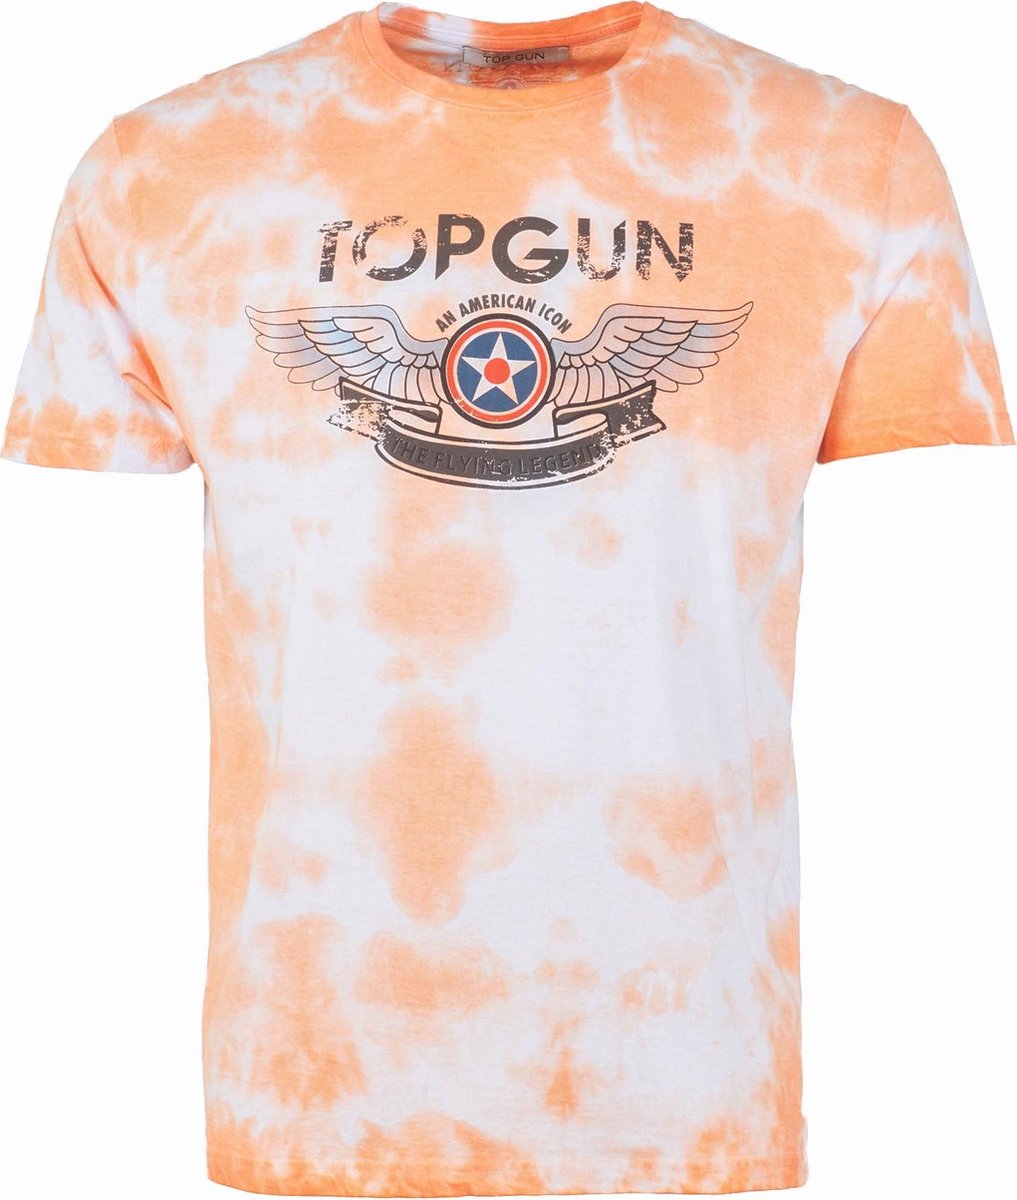 Top Gun ® T-Shirt American Icon camouflage (XL)